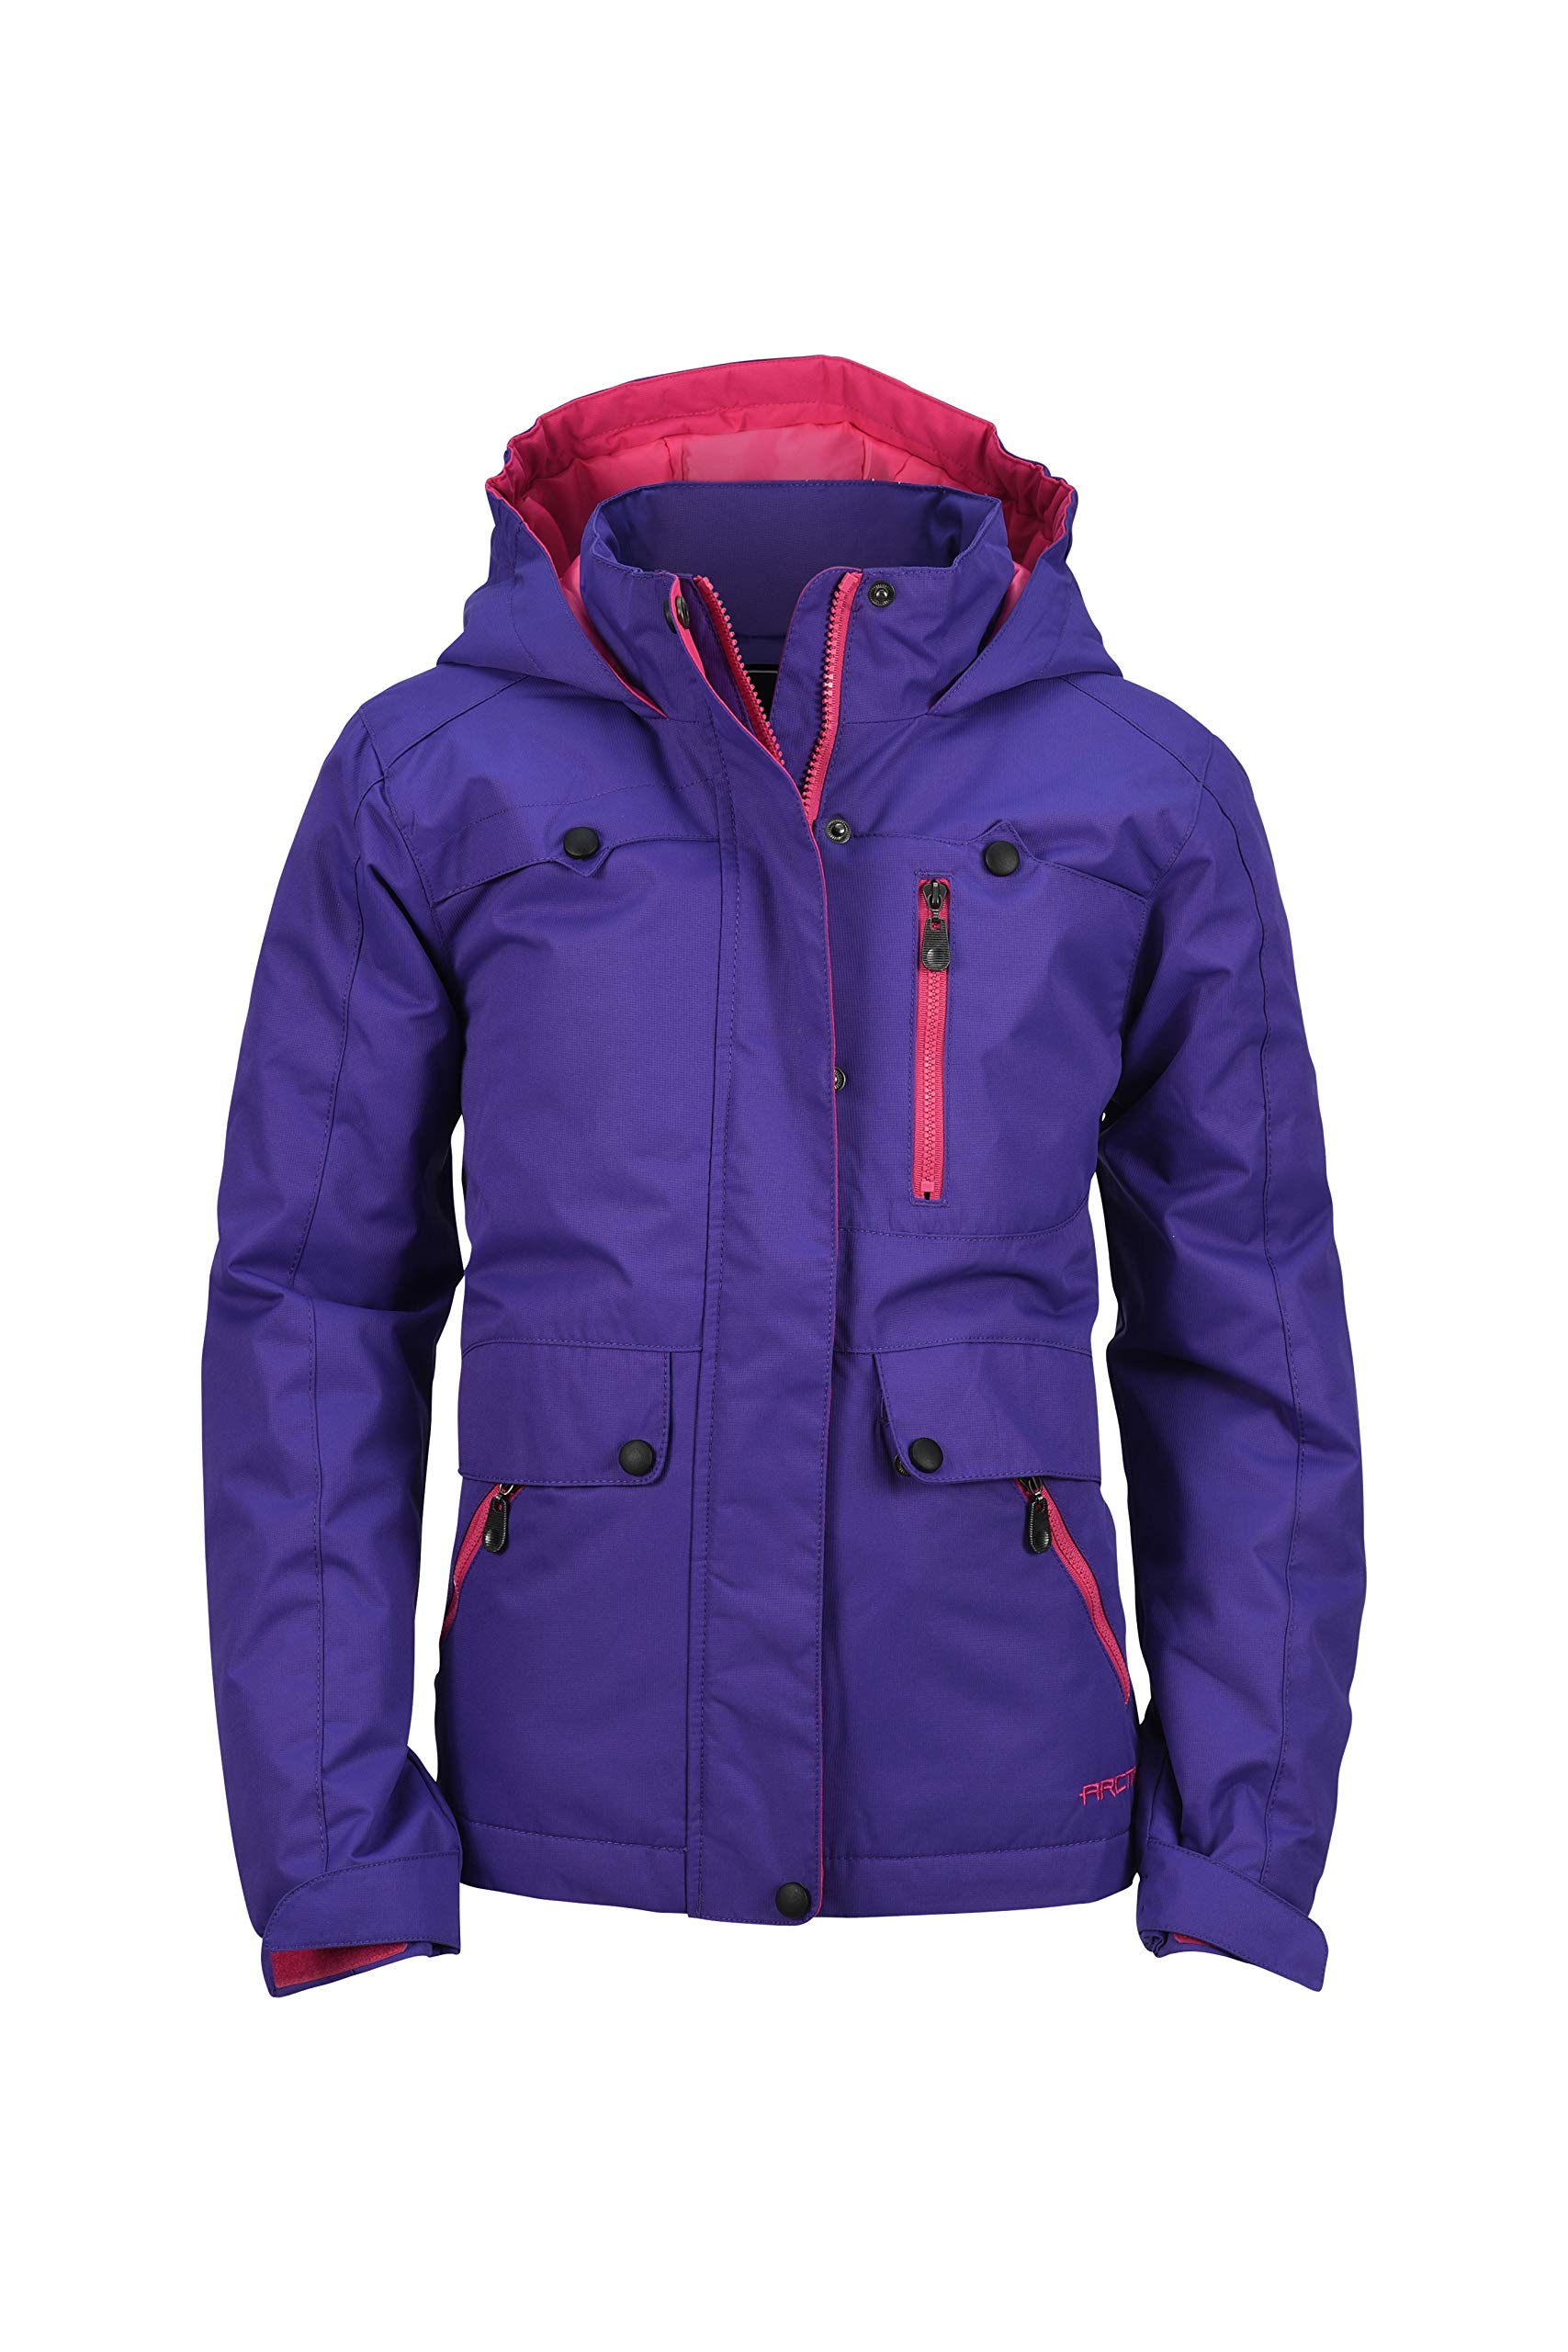 Arctix Kids Jackalope Insulated Winter Jacket, Purple, 4T